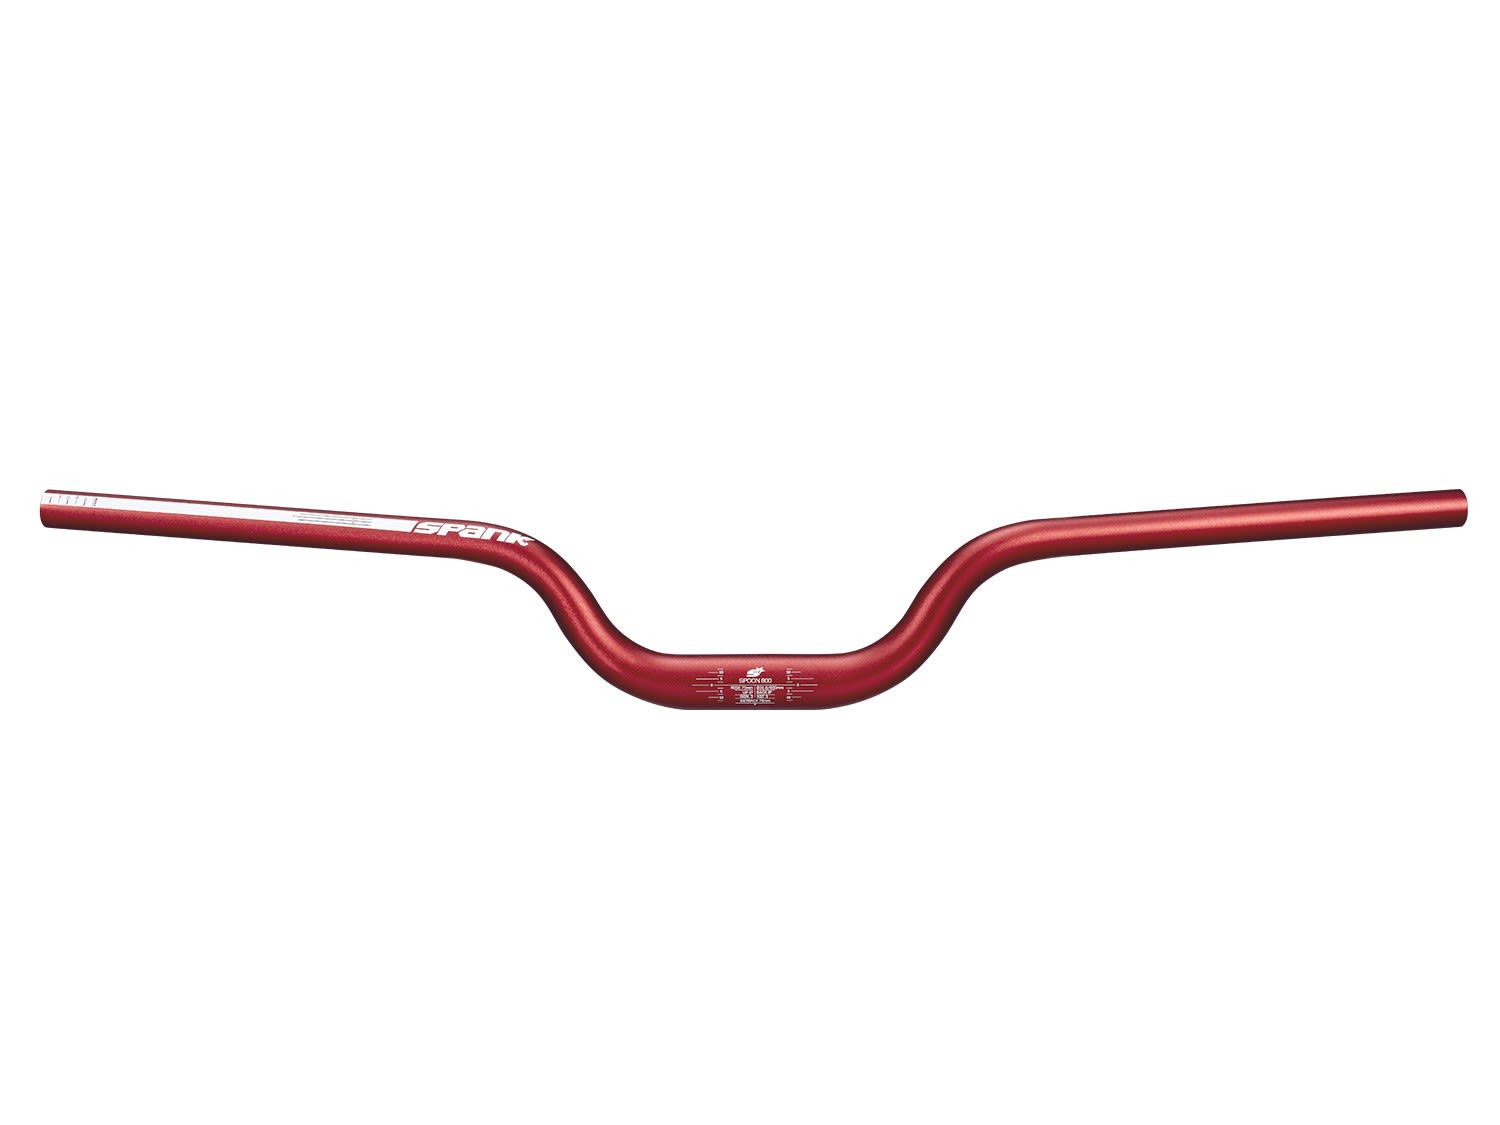 Spank Spoon 800 Fahrradlenker Rot | Größe 20 mm |  Zubehör